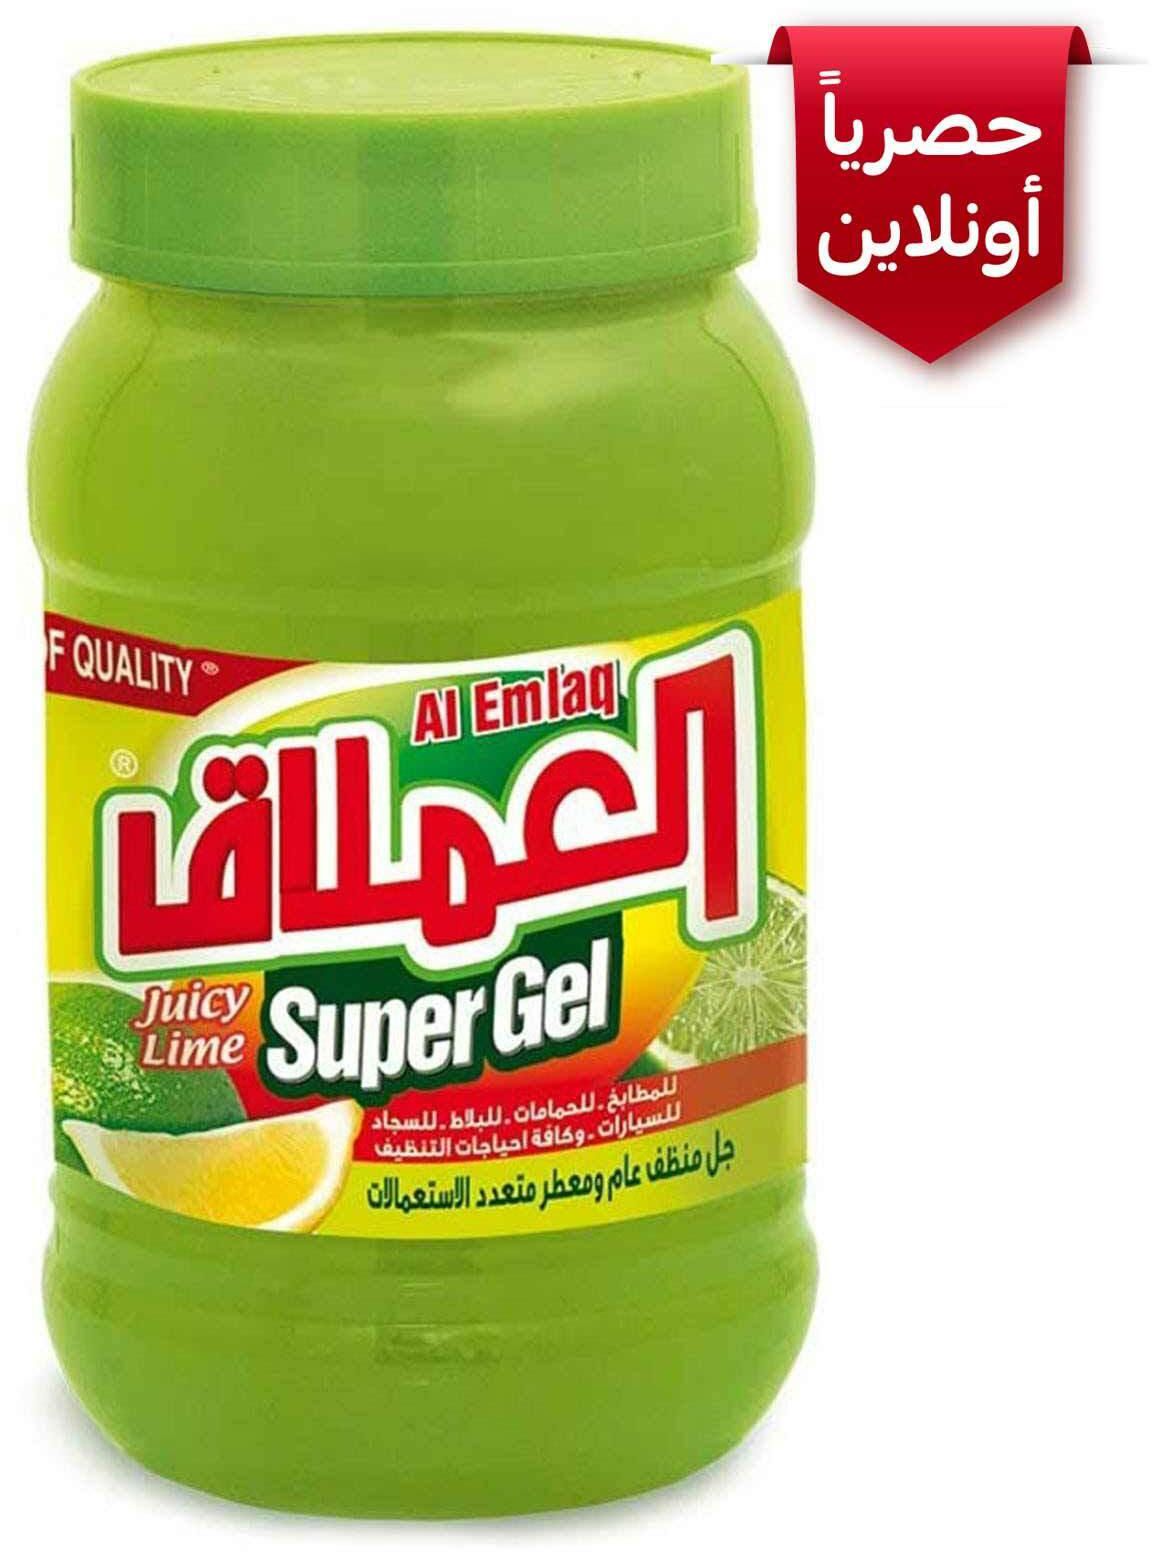 Alemlaq super gel juicy lime 600 g